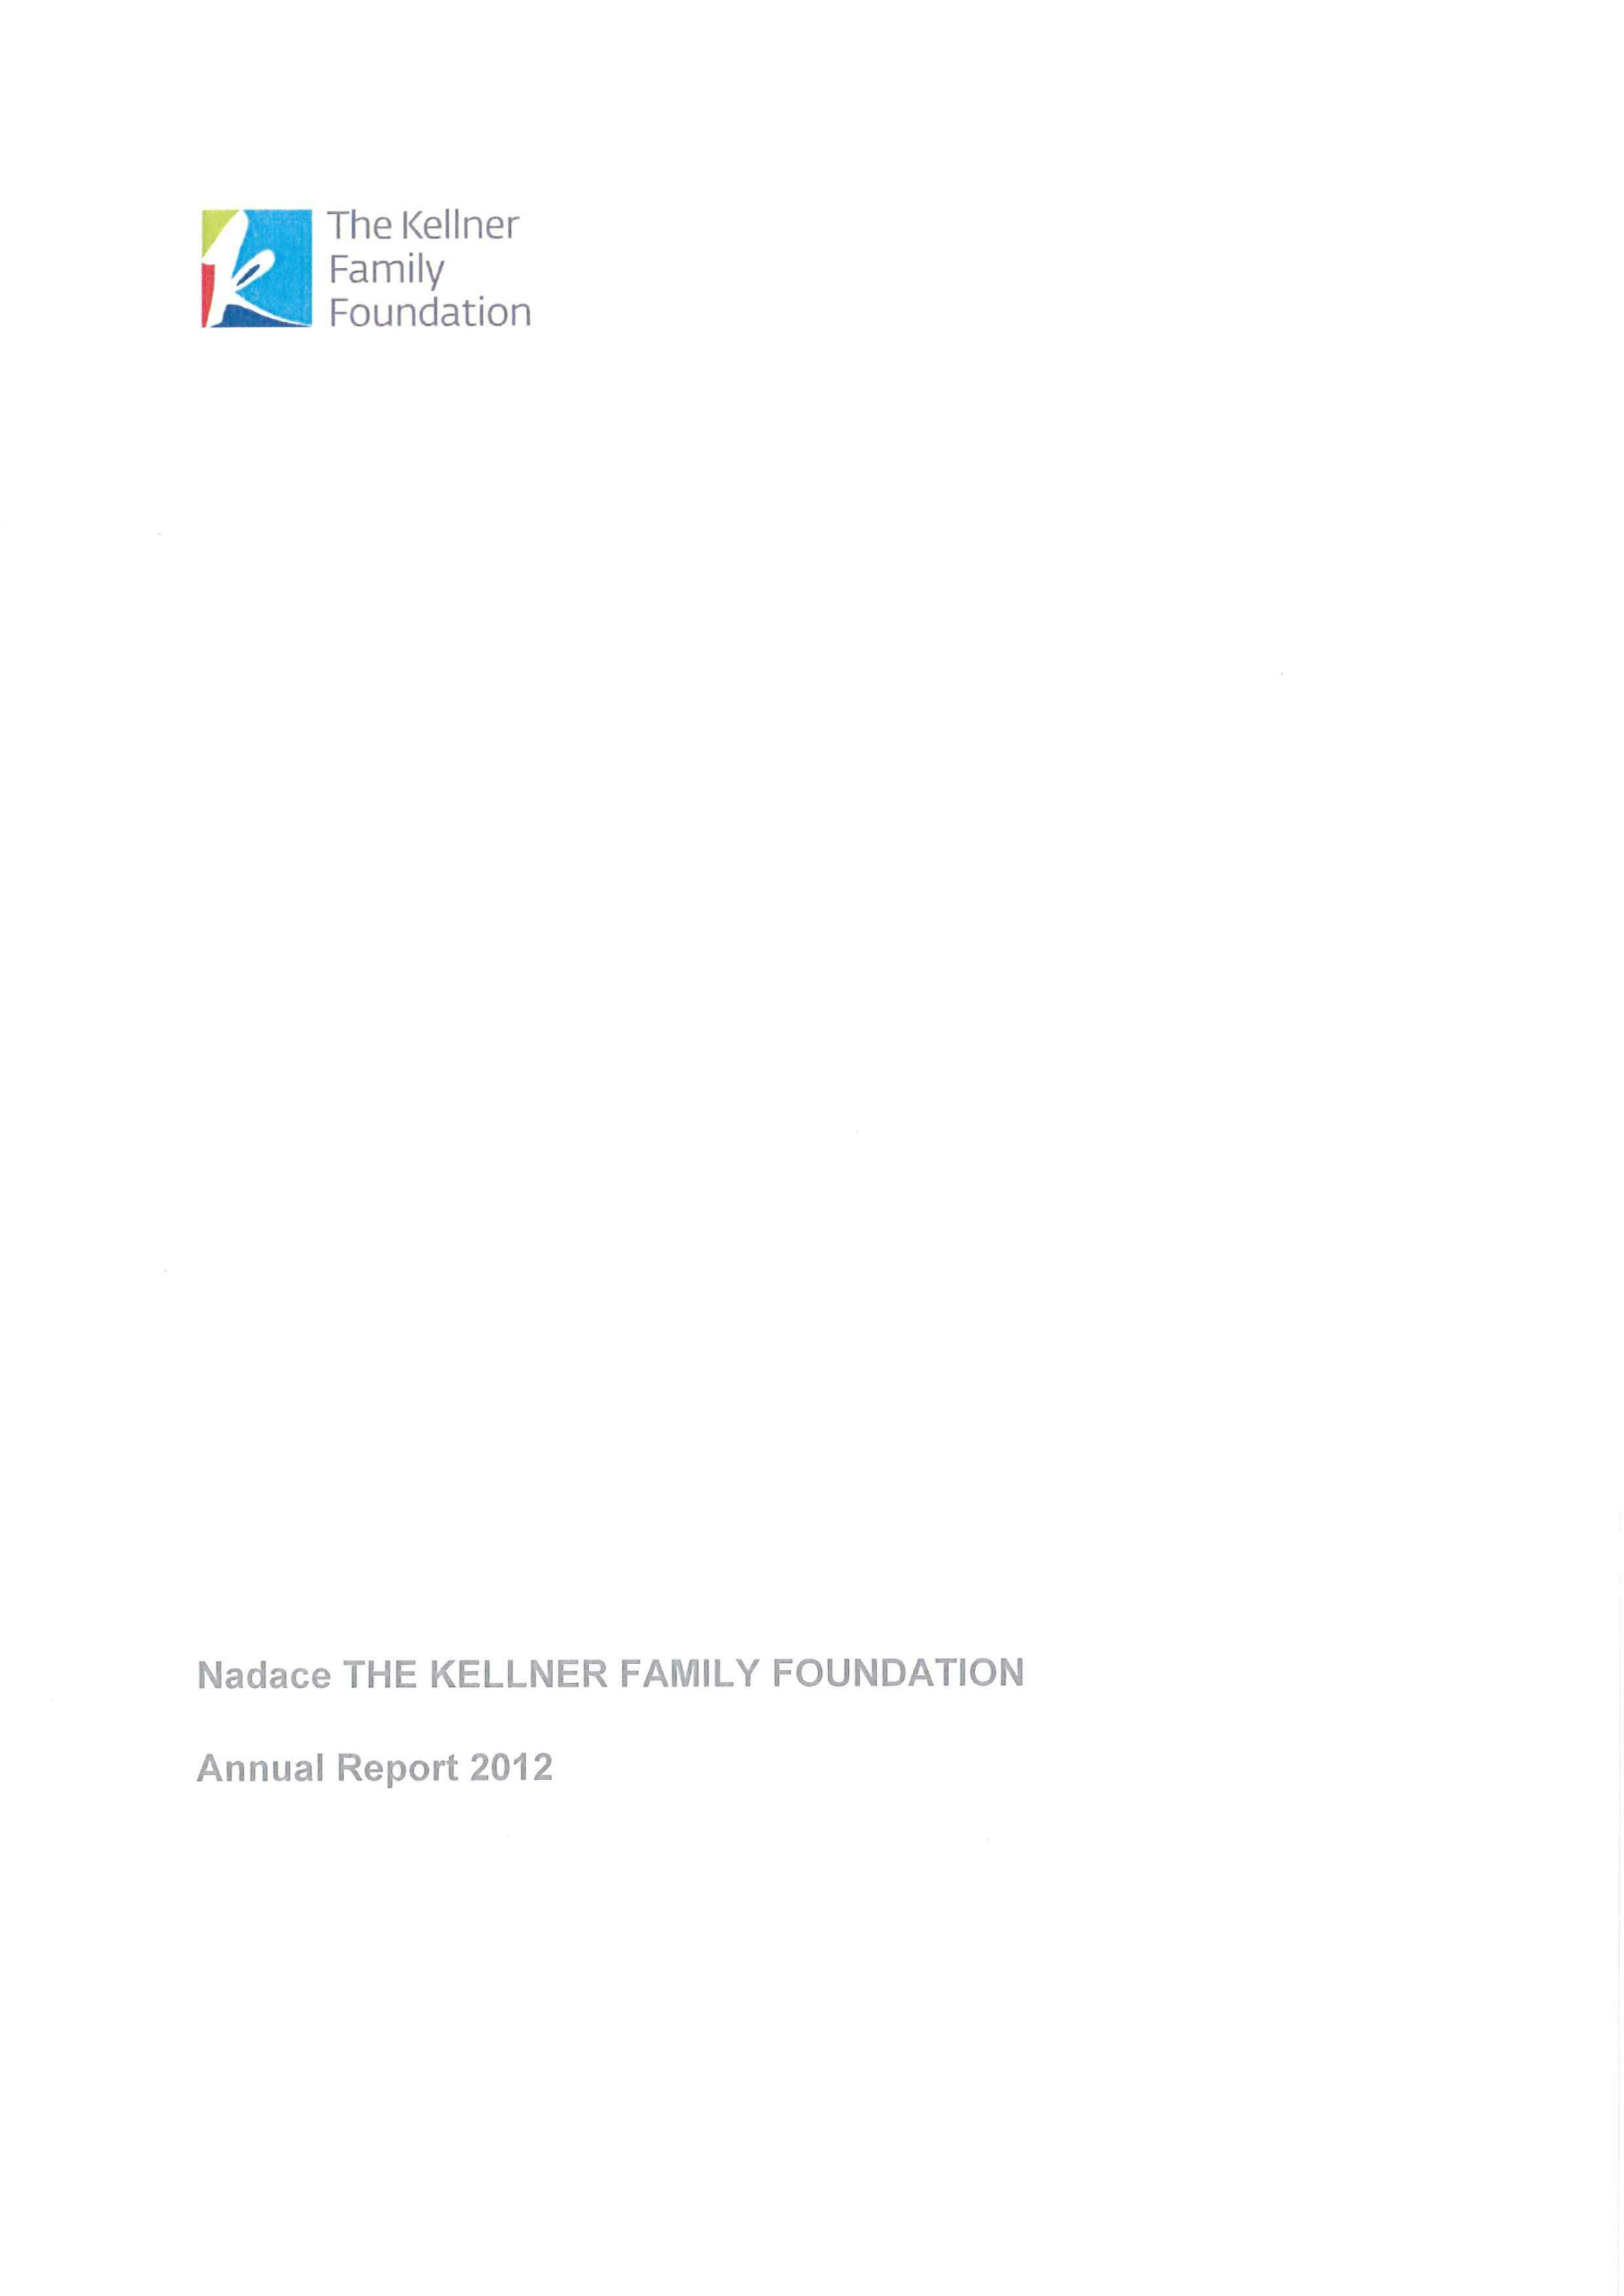 tkff-vz-2012-en.pdf